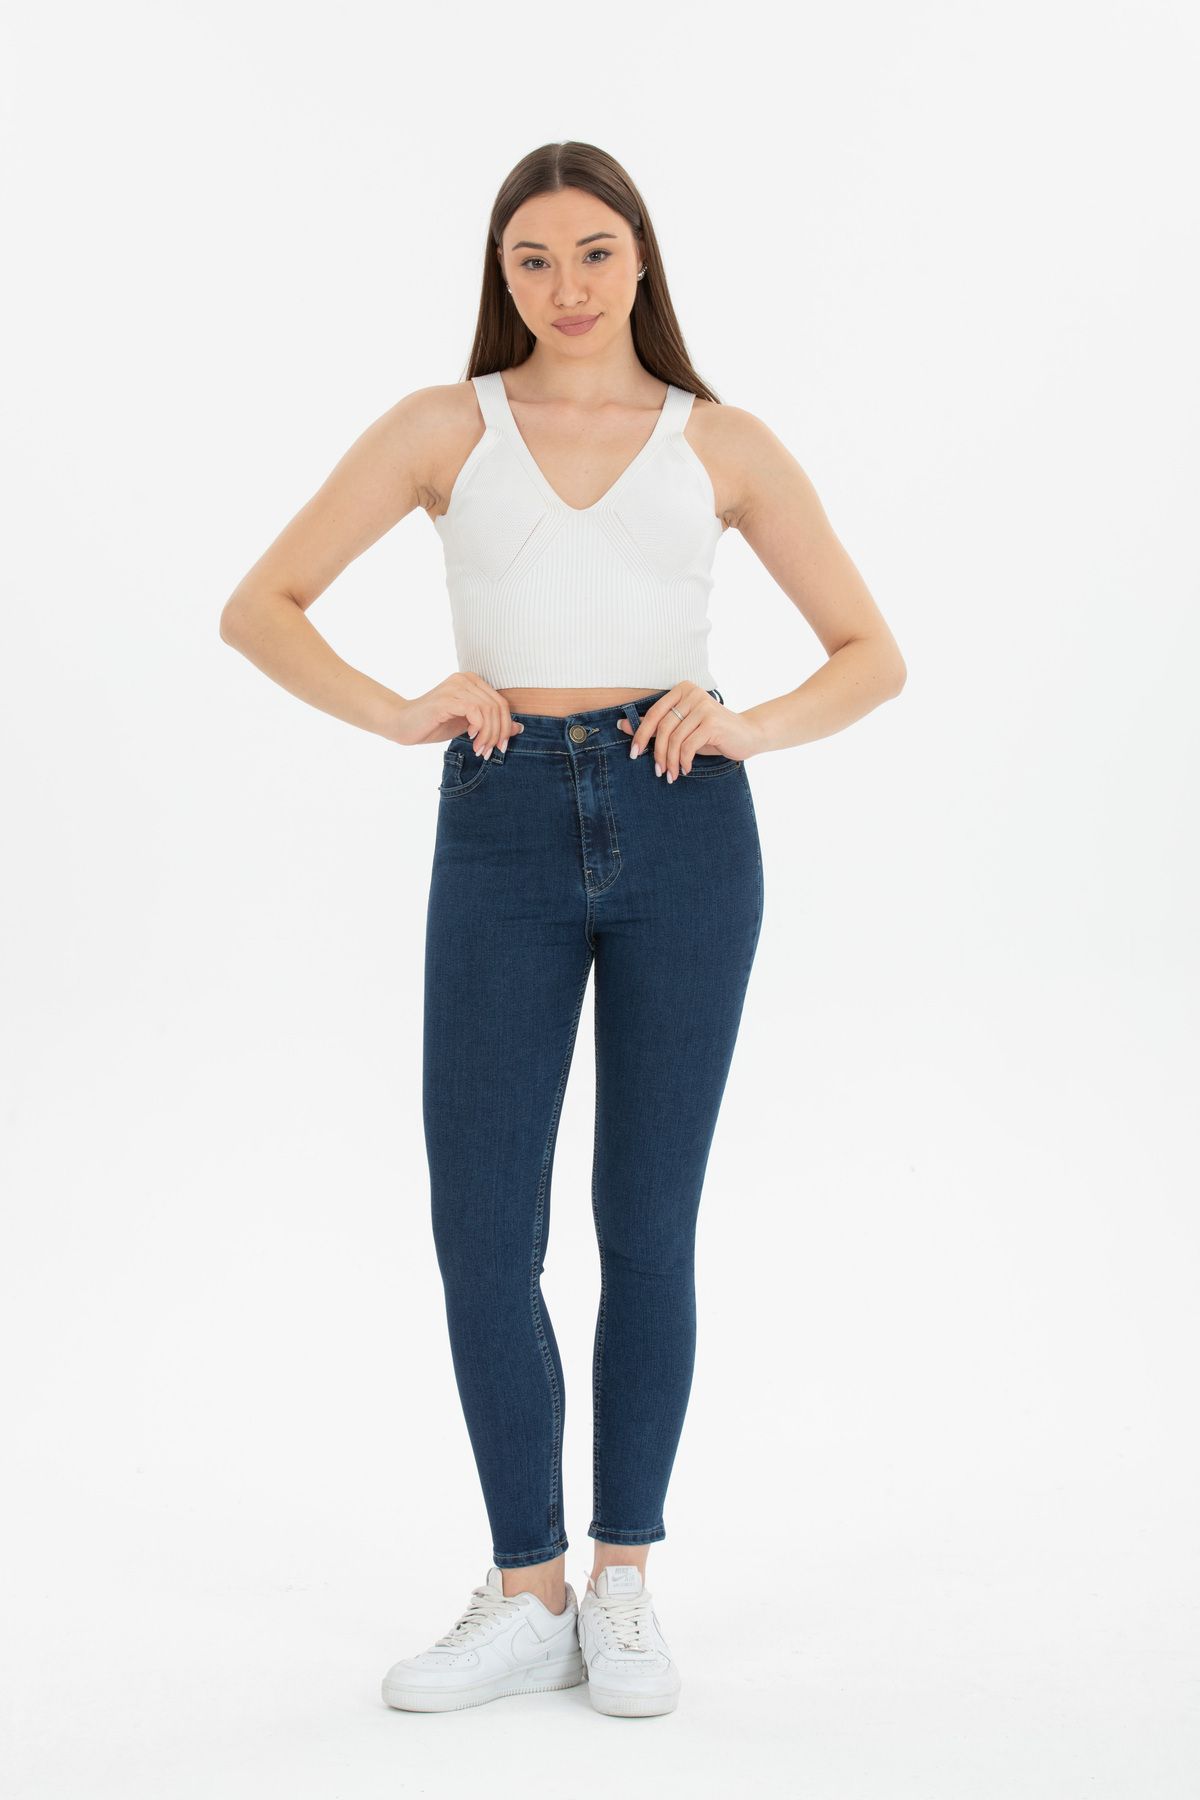 Jeany Jeans Lacivert Yüksek Bel Dar Paça Jeans Denim Kot Pantolon